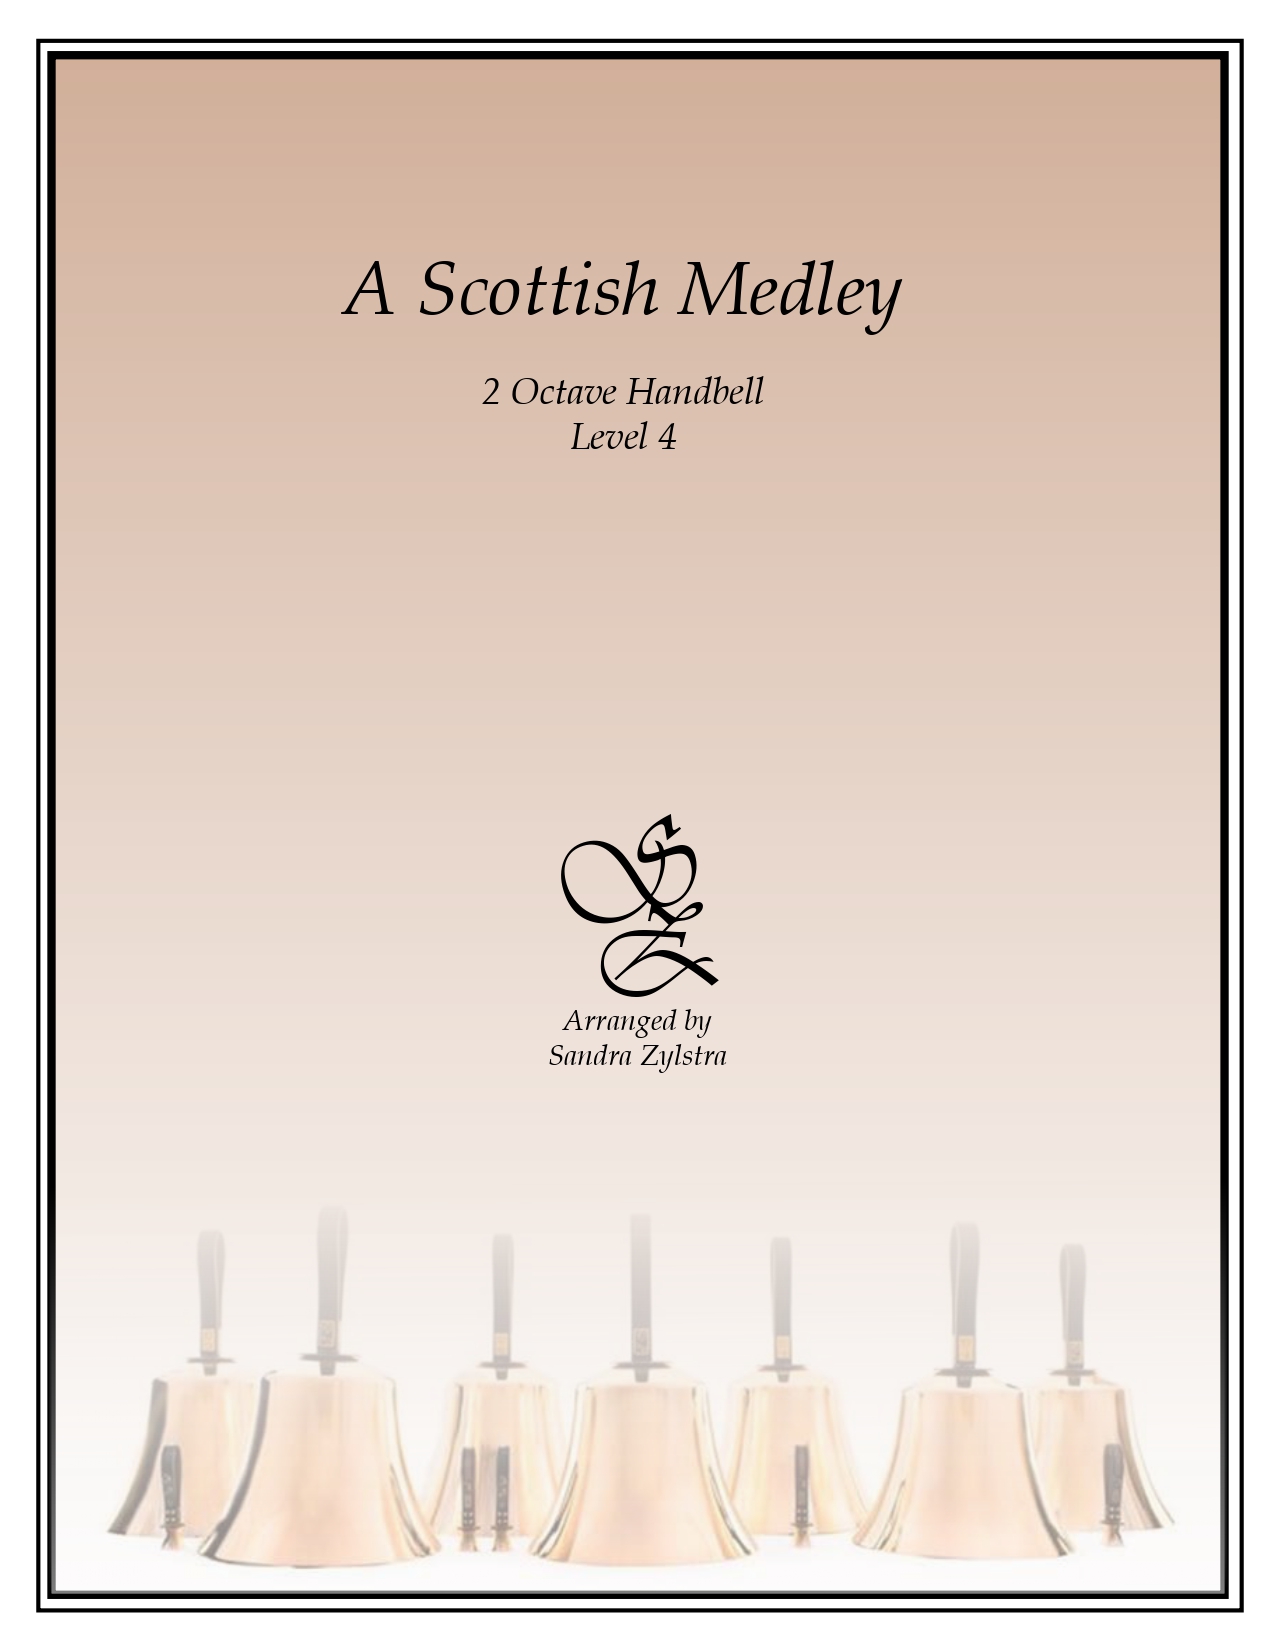 A Scottish Medley 2 octave handbells cover page 00011